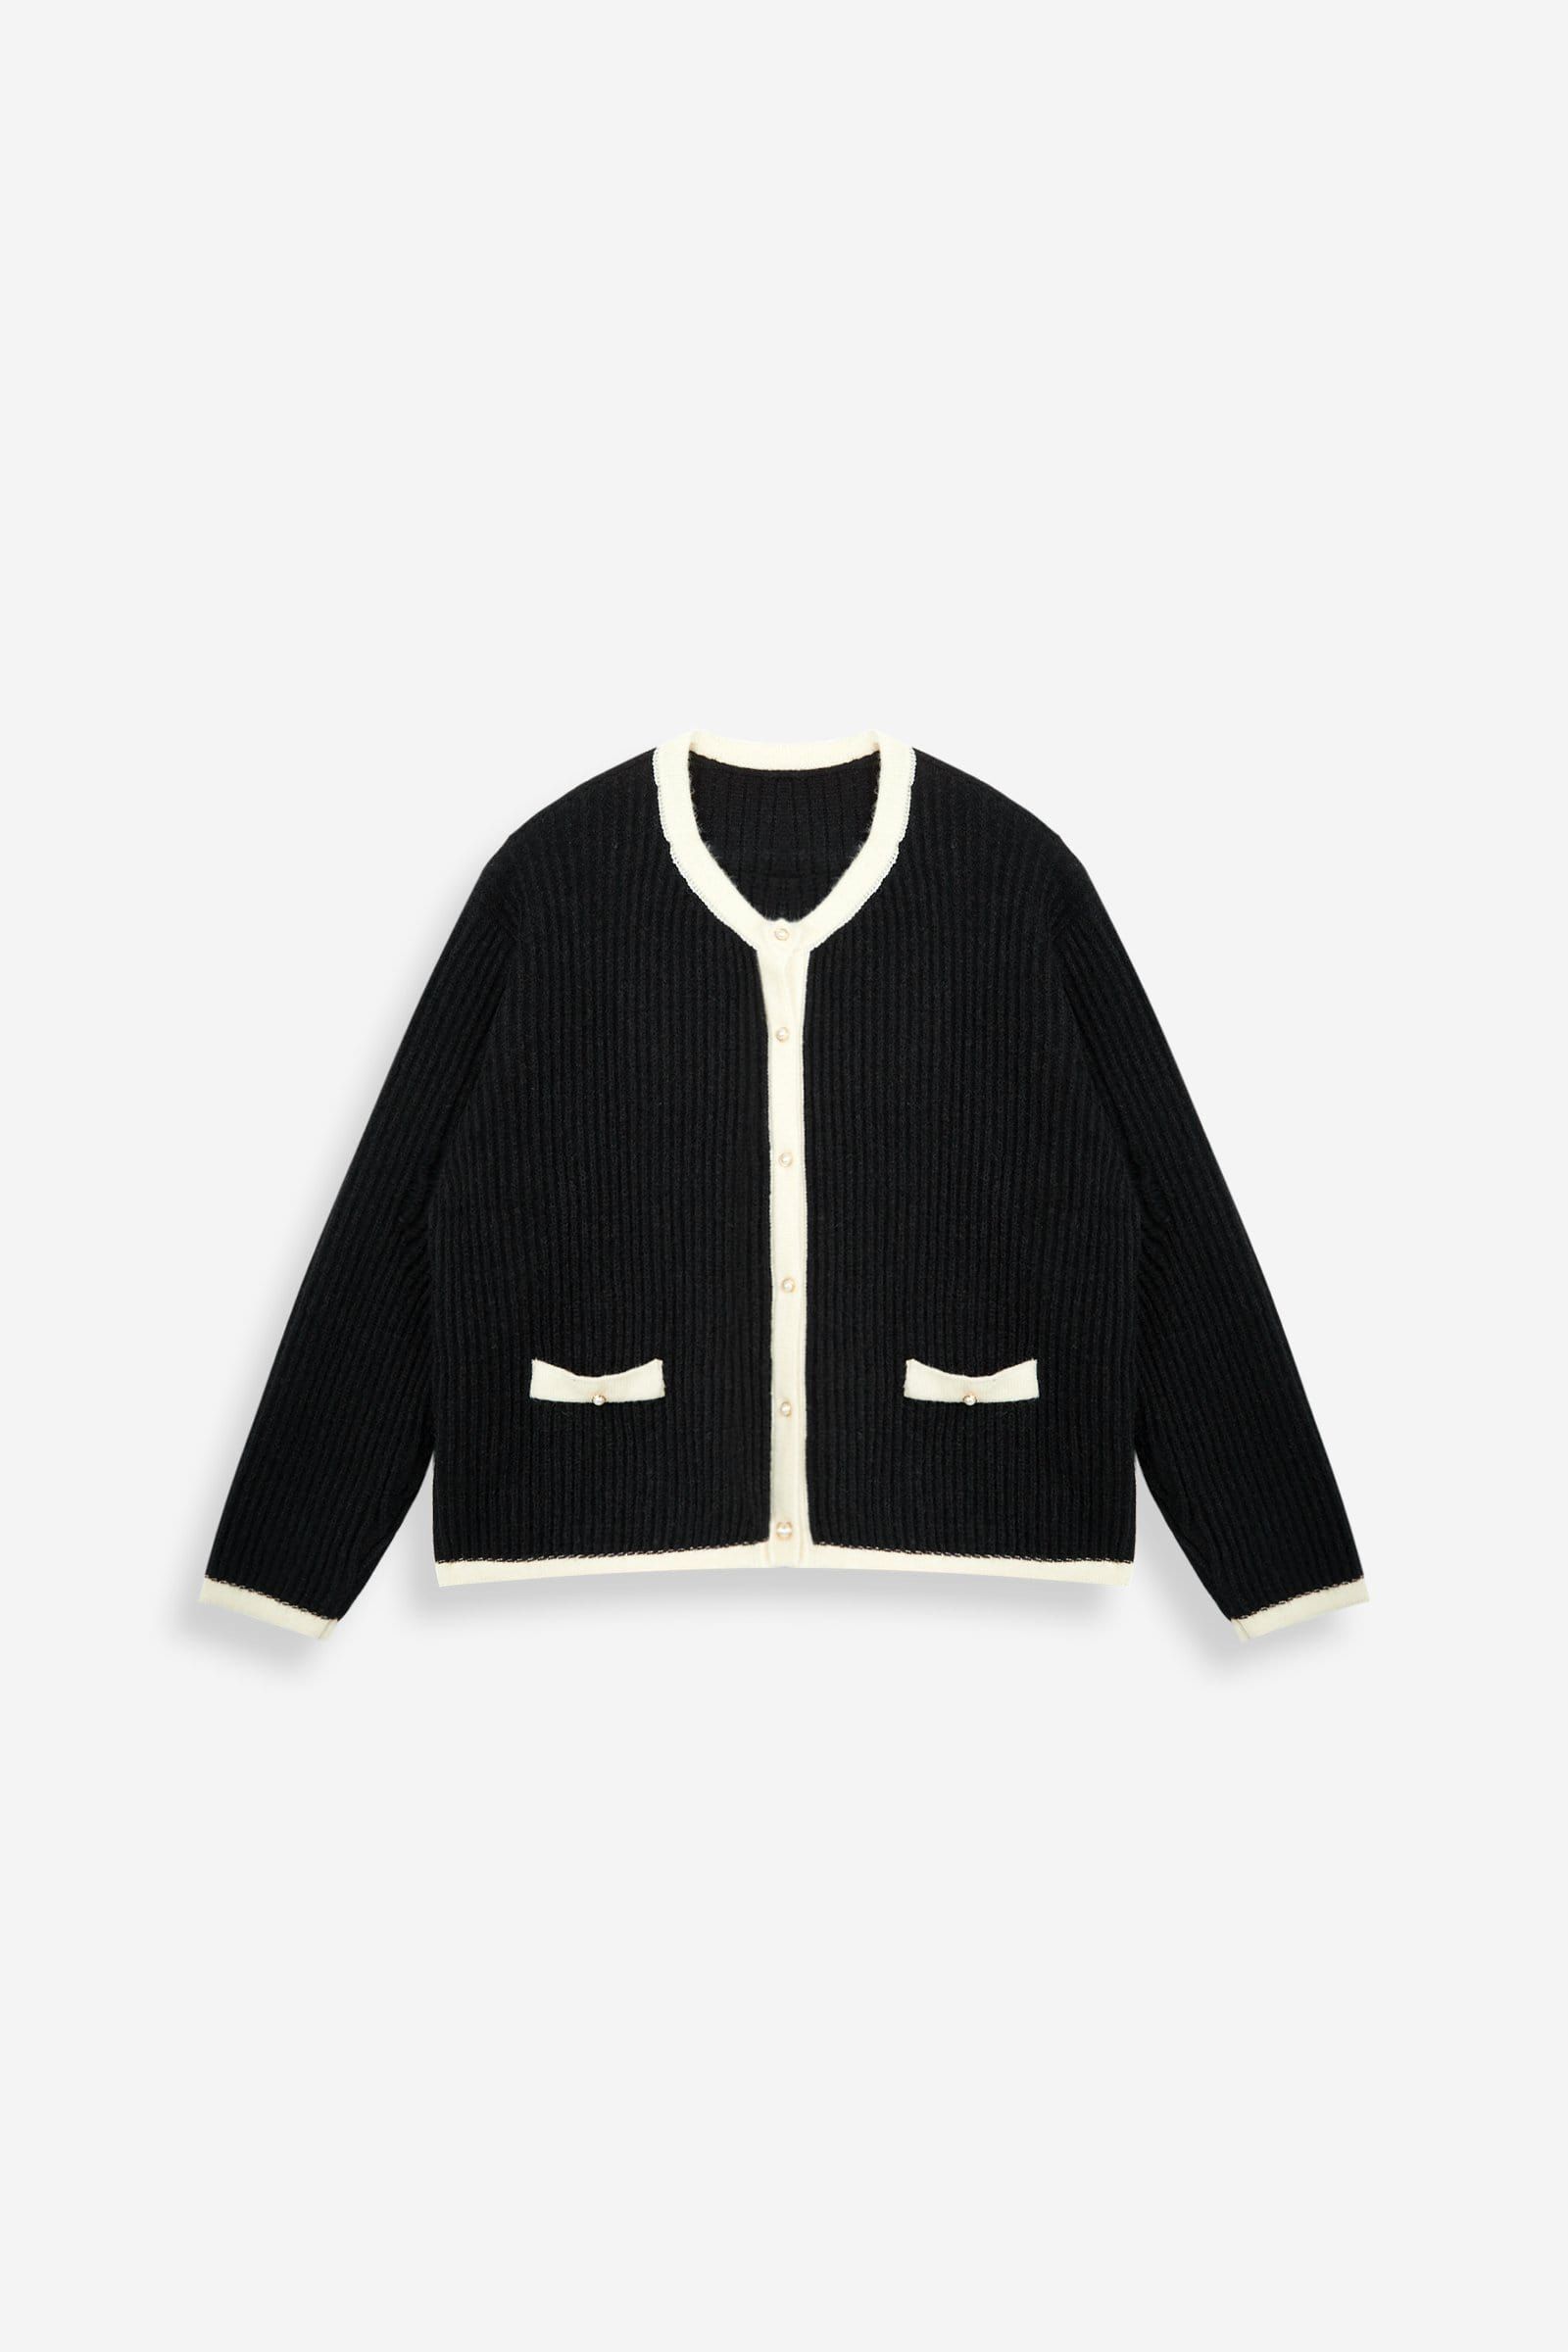 Leigha Black Contrast knitted Cardigan | J.ING